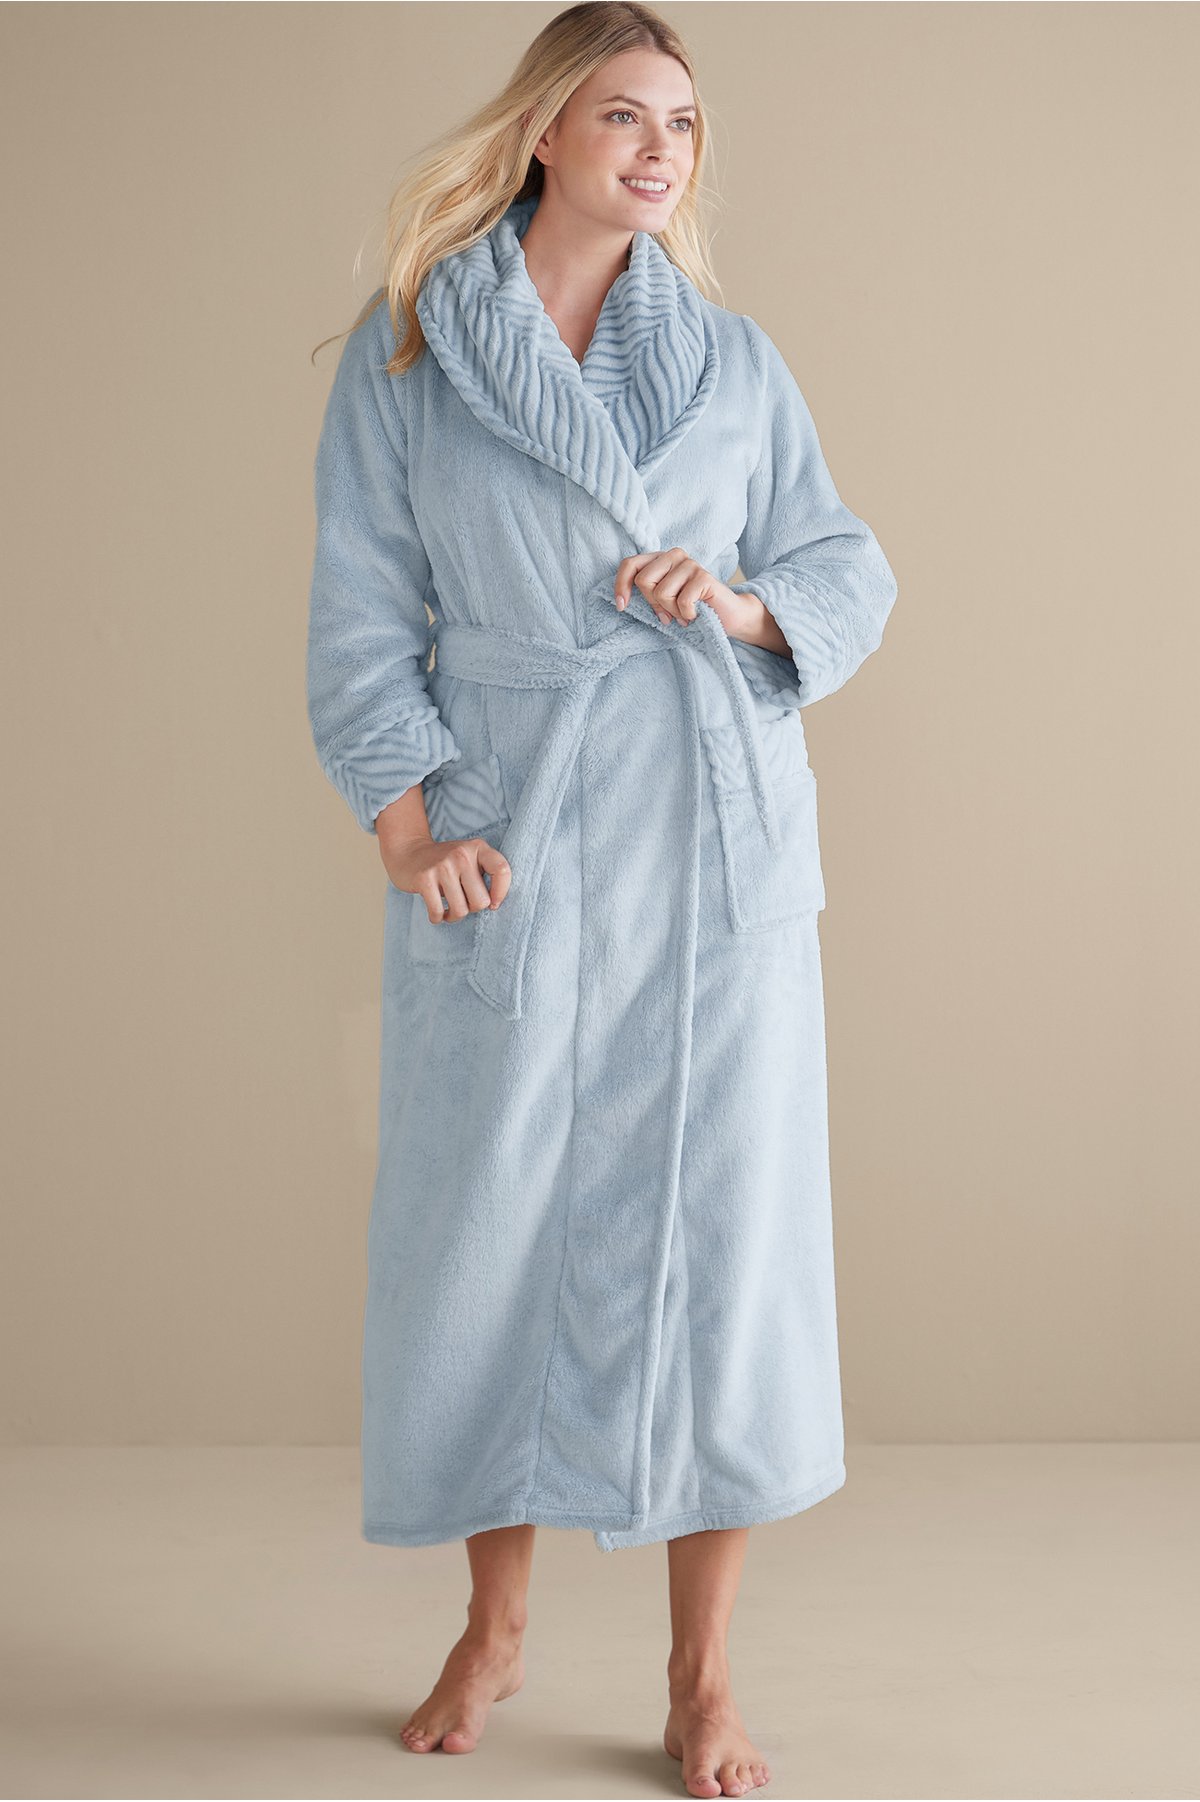 Women's Royal Plush Robe by Soft Surroundings, in Blue Fog size L (14-16)